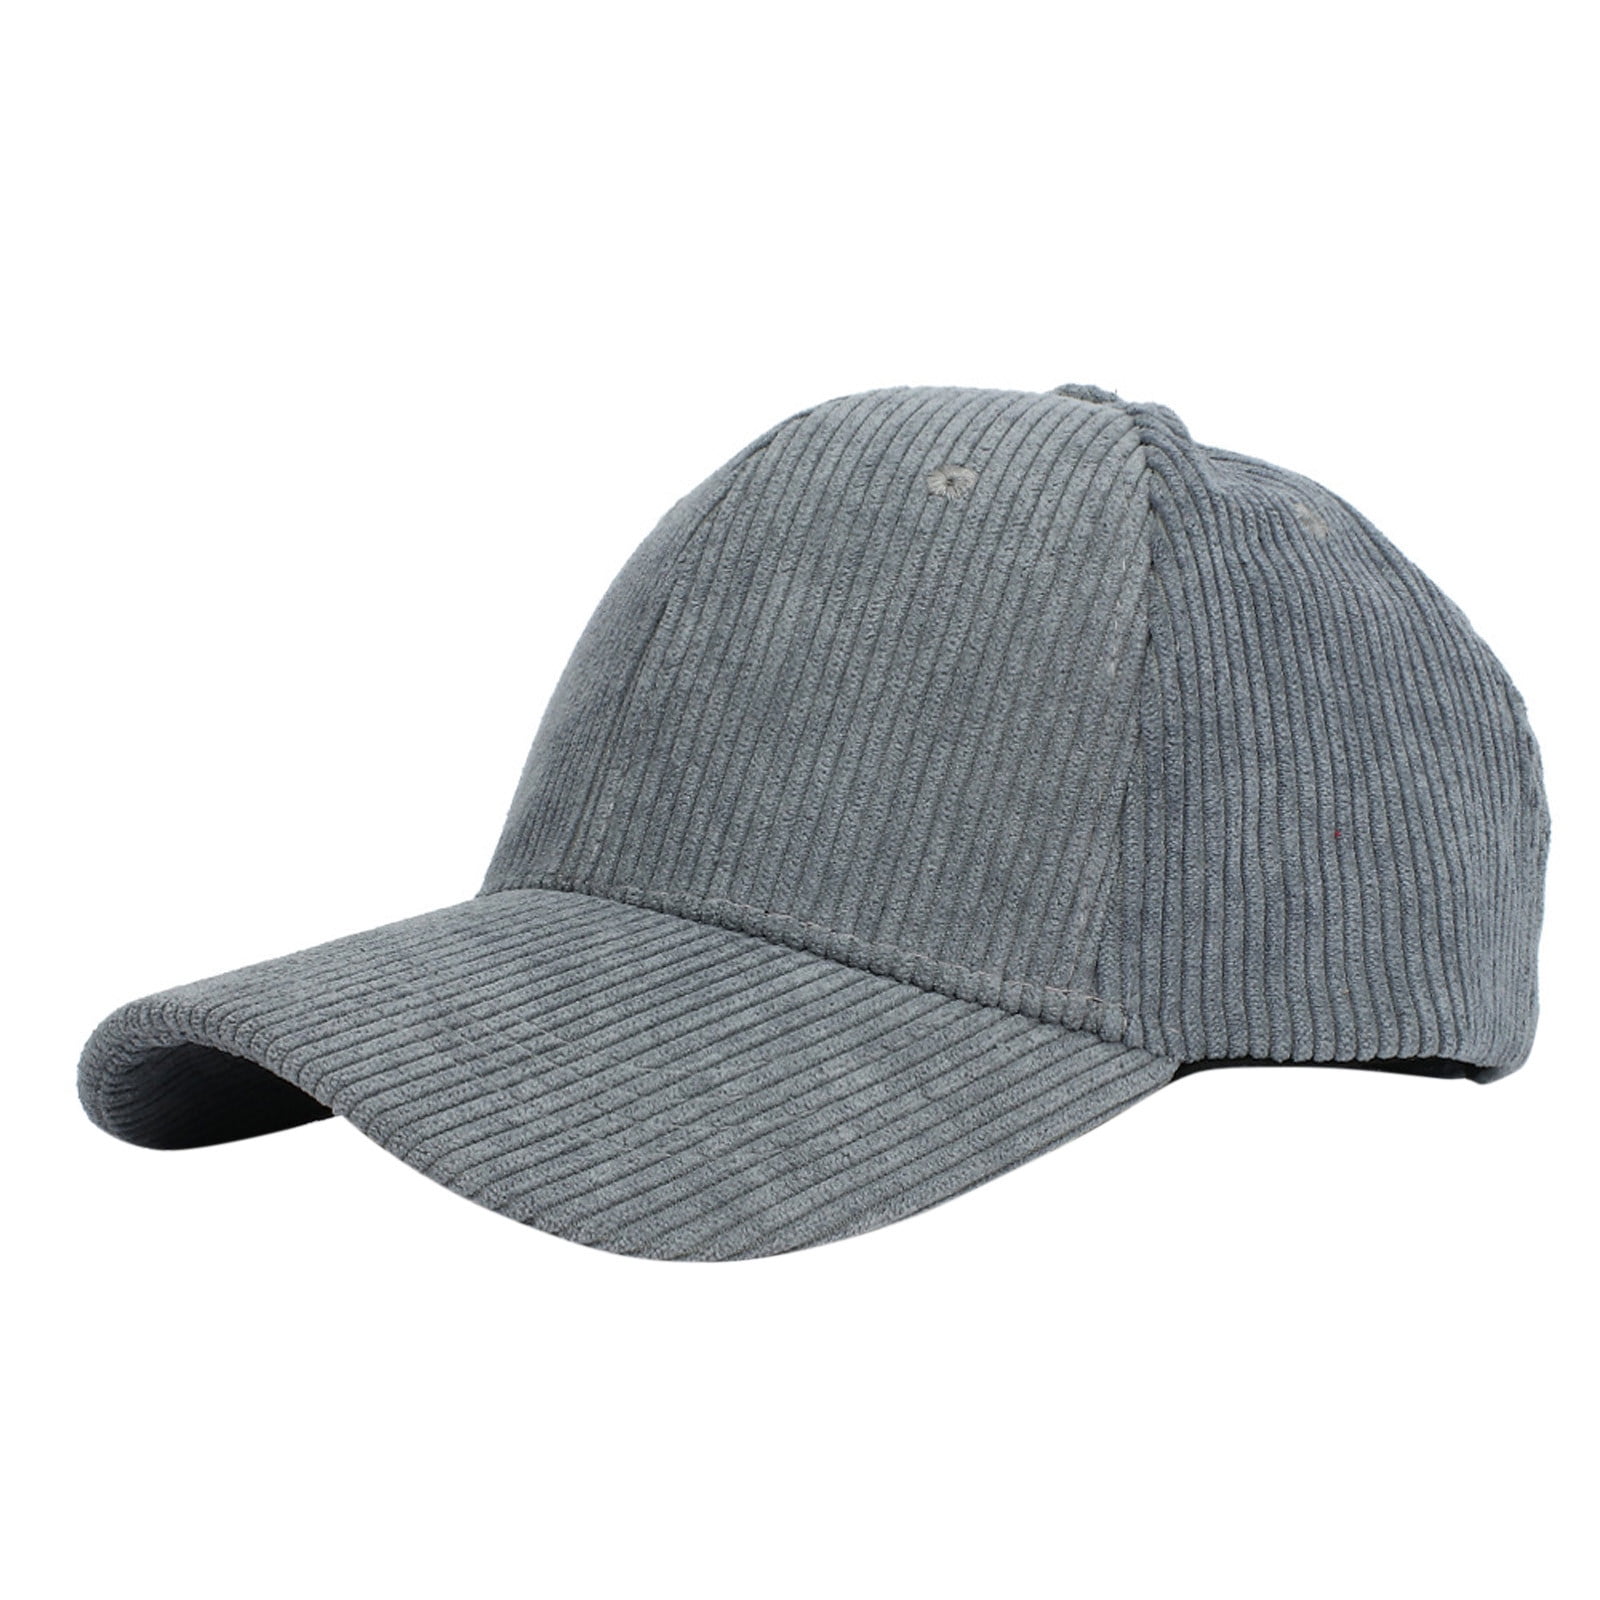 Hat For of Warm World Men Corduroy Women Outdoor Hats Sports HIBRO Baseball Gift Travel Cap